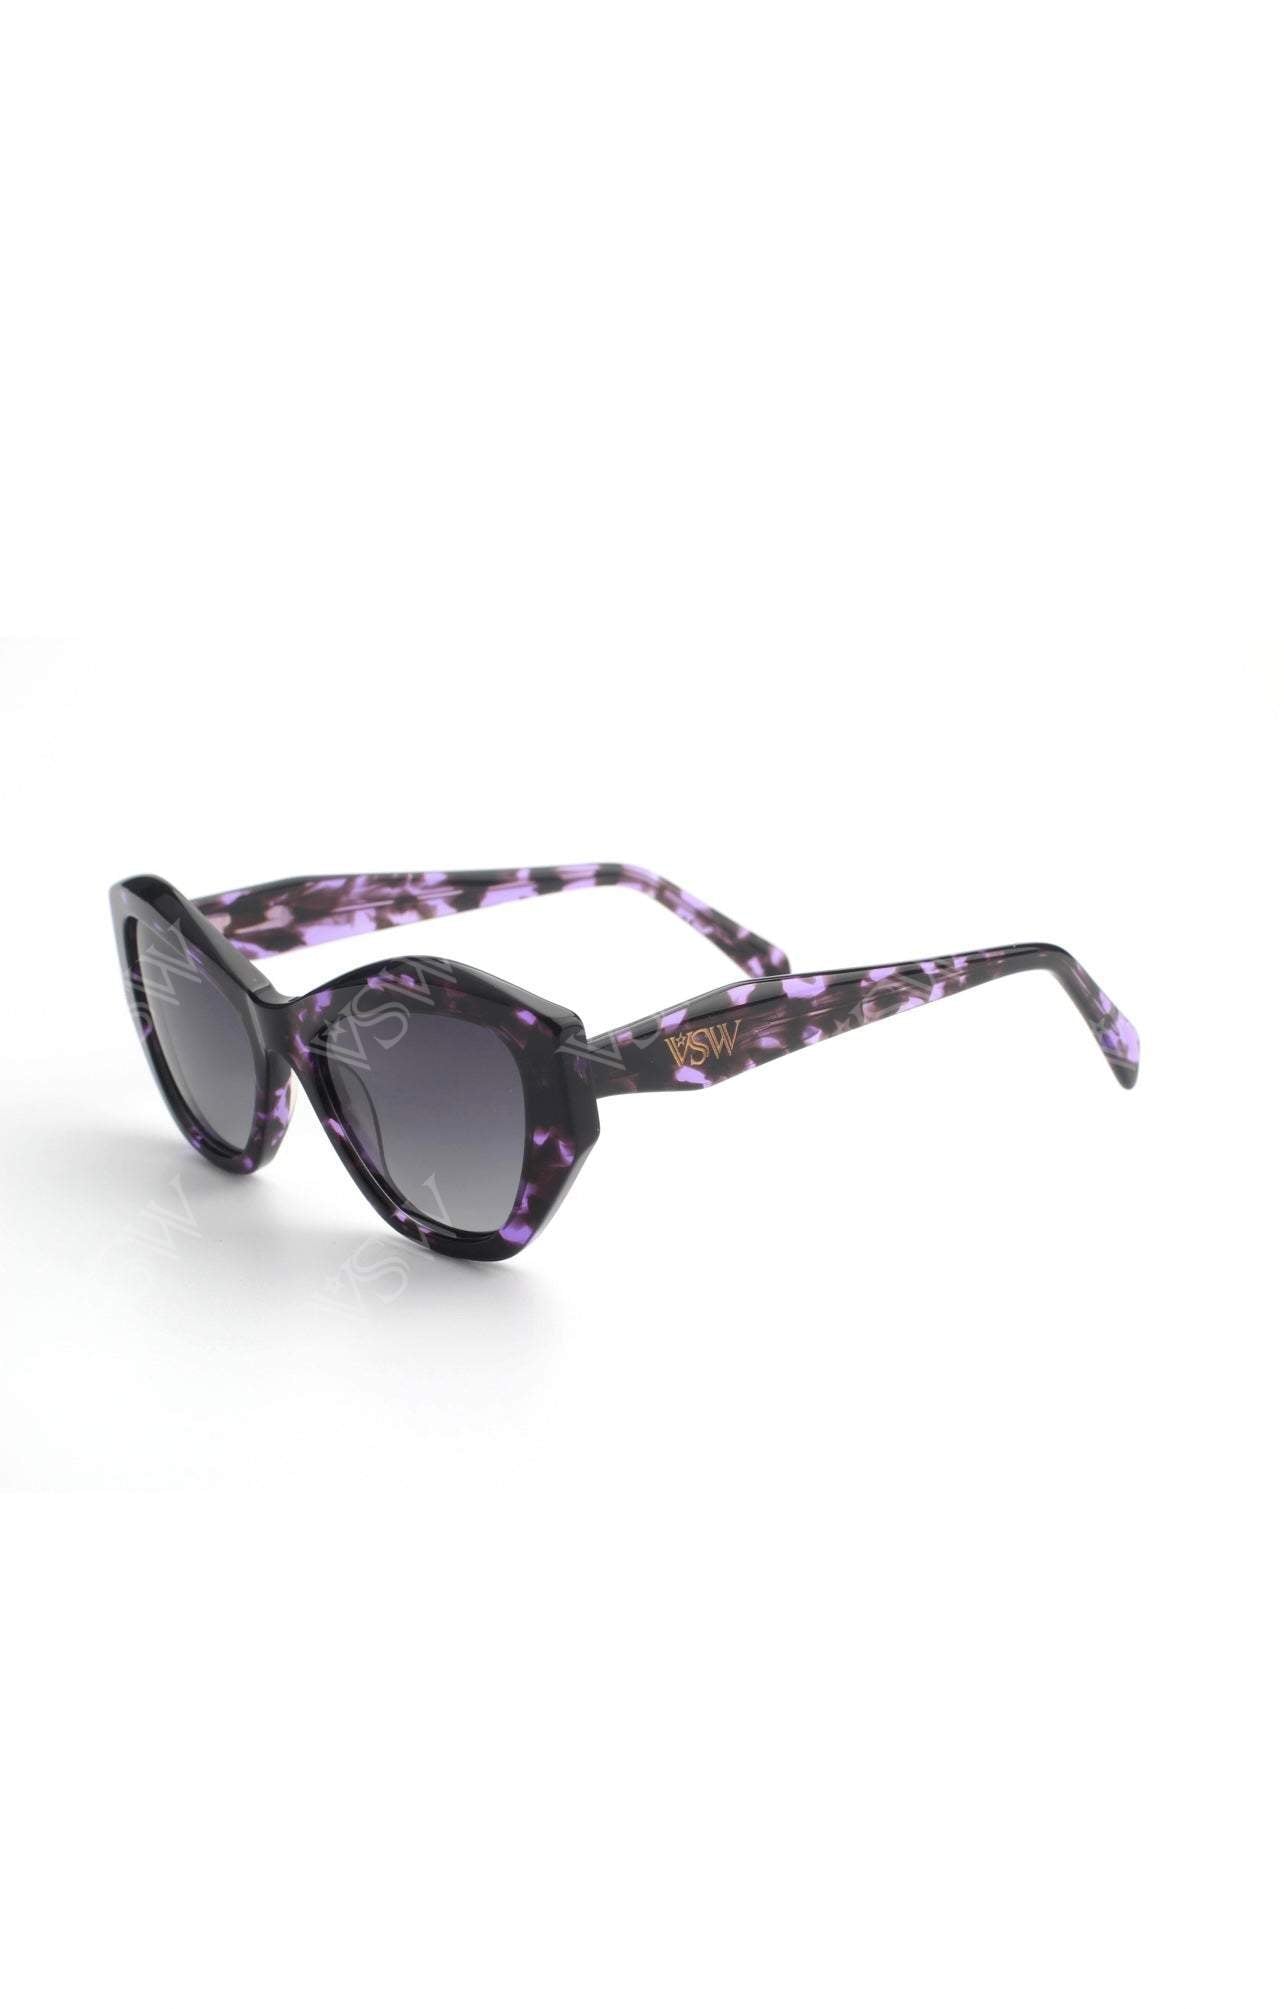 Sunglasses Fiji - Sunglasses from [store] by VSW - women Accesorie, women sunglasses